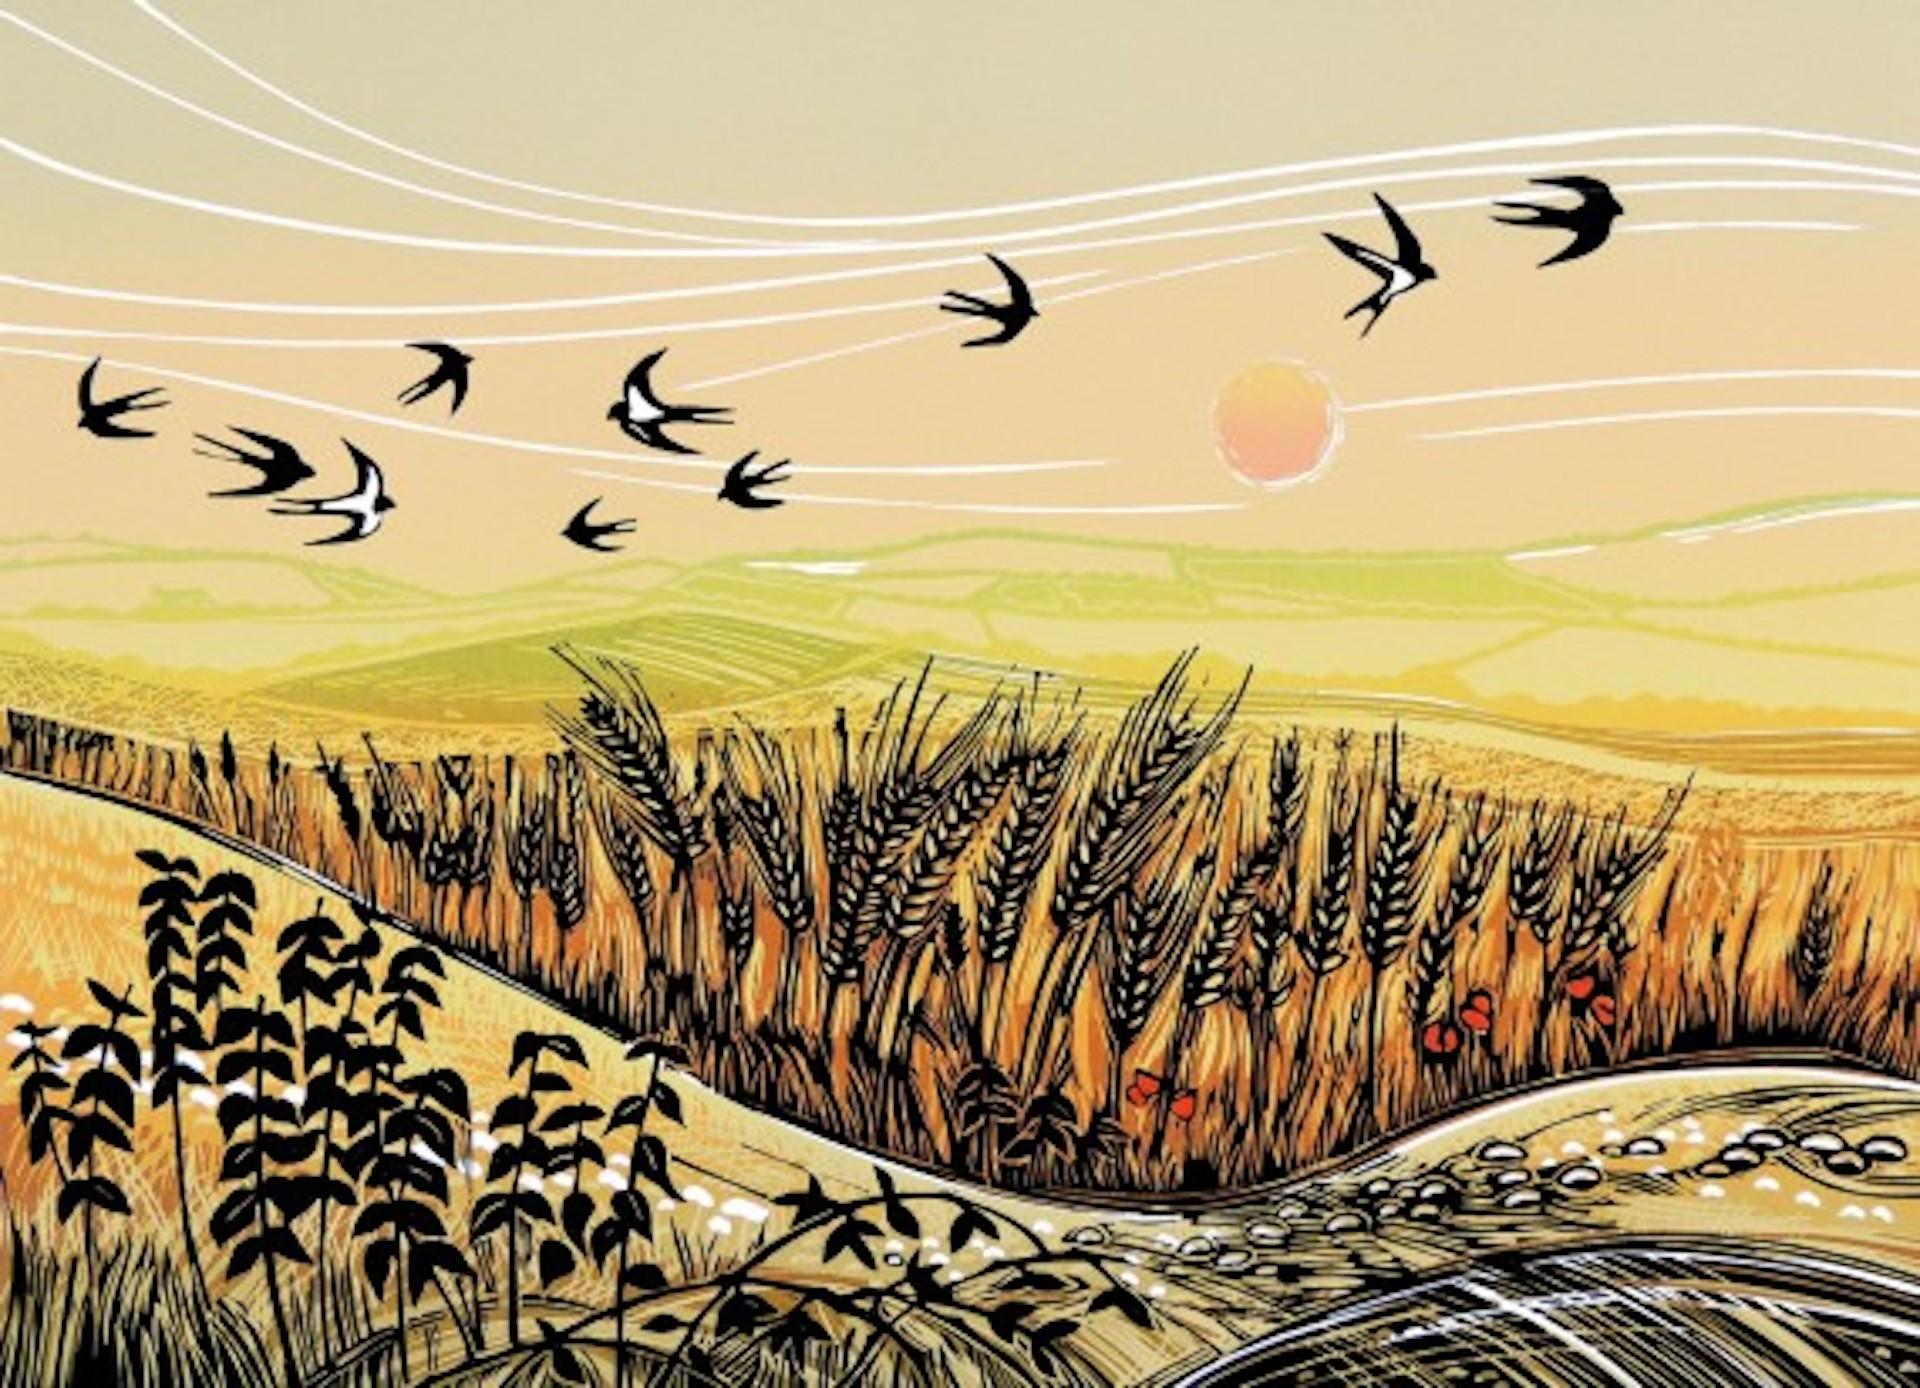 Flight Over The Barley, Rob Barnes, Limited Edition Print, Birds Field Artwork